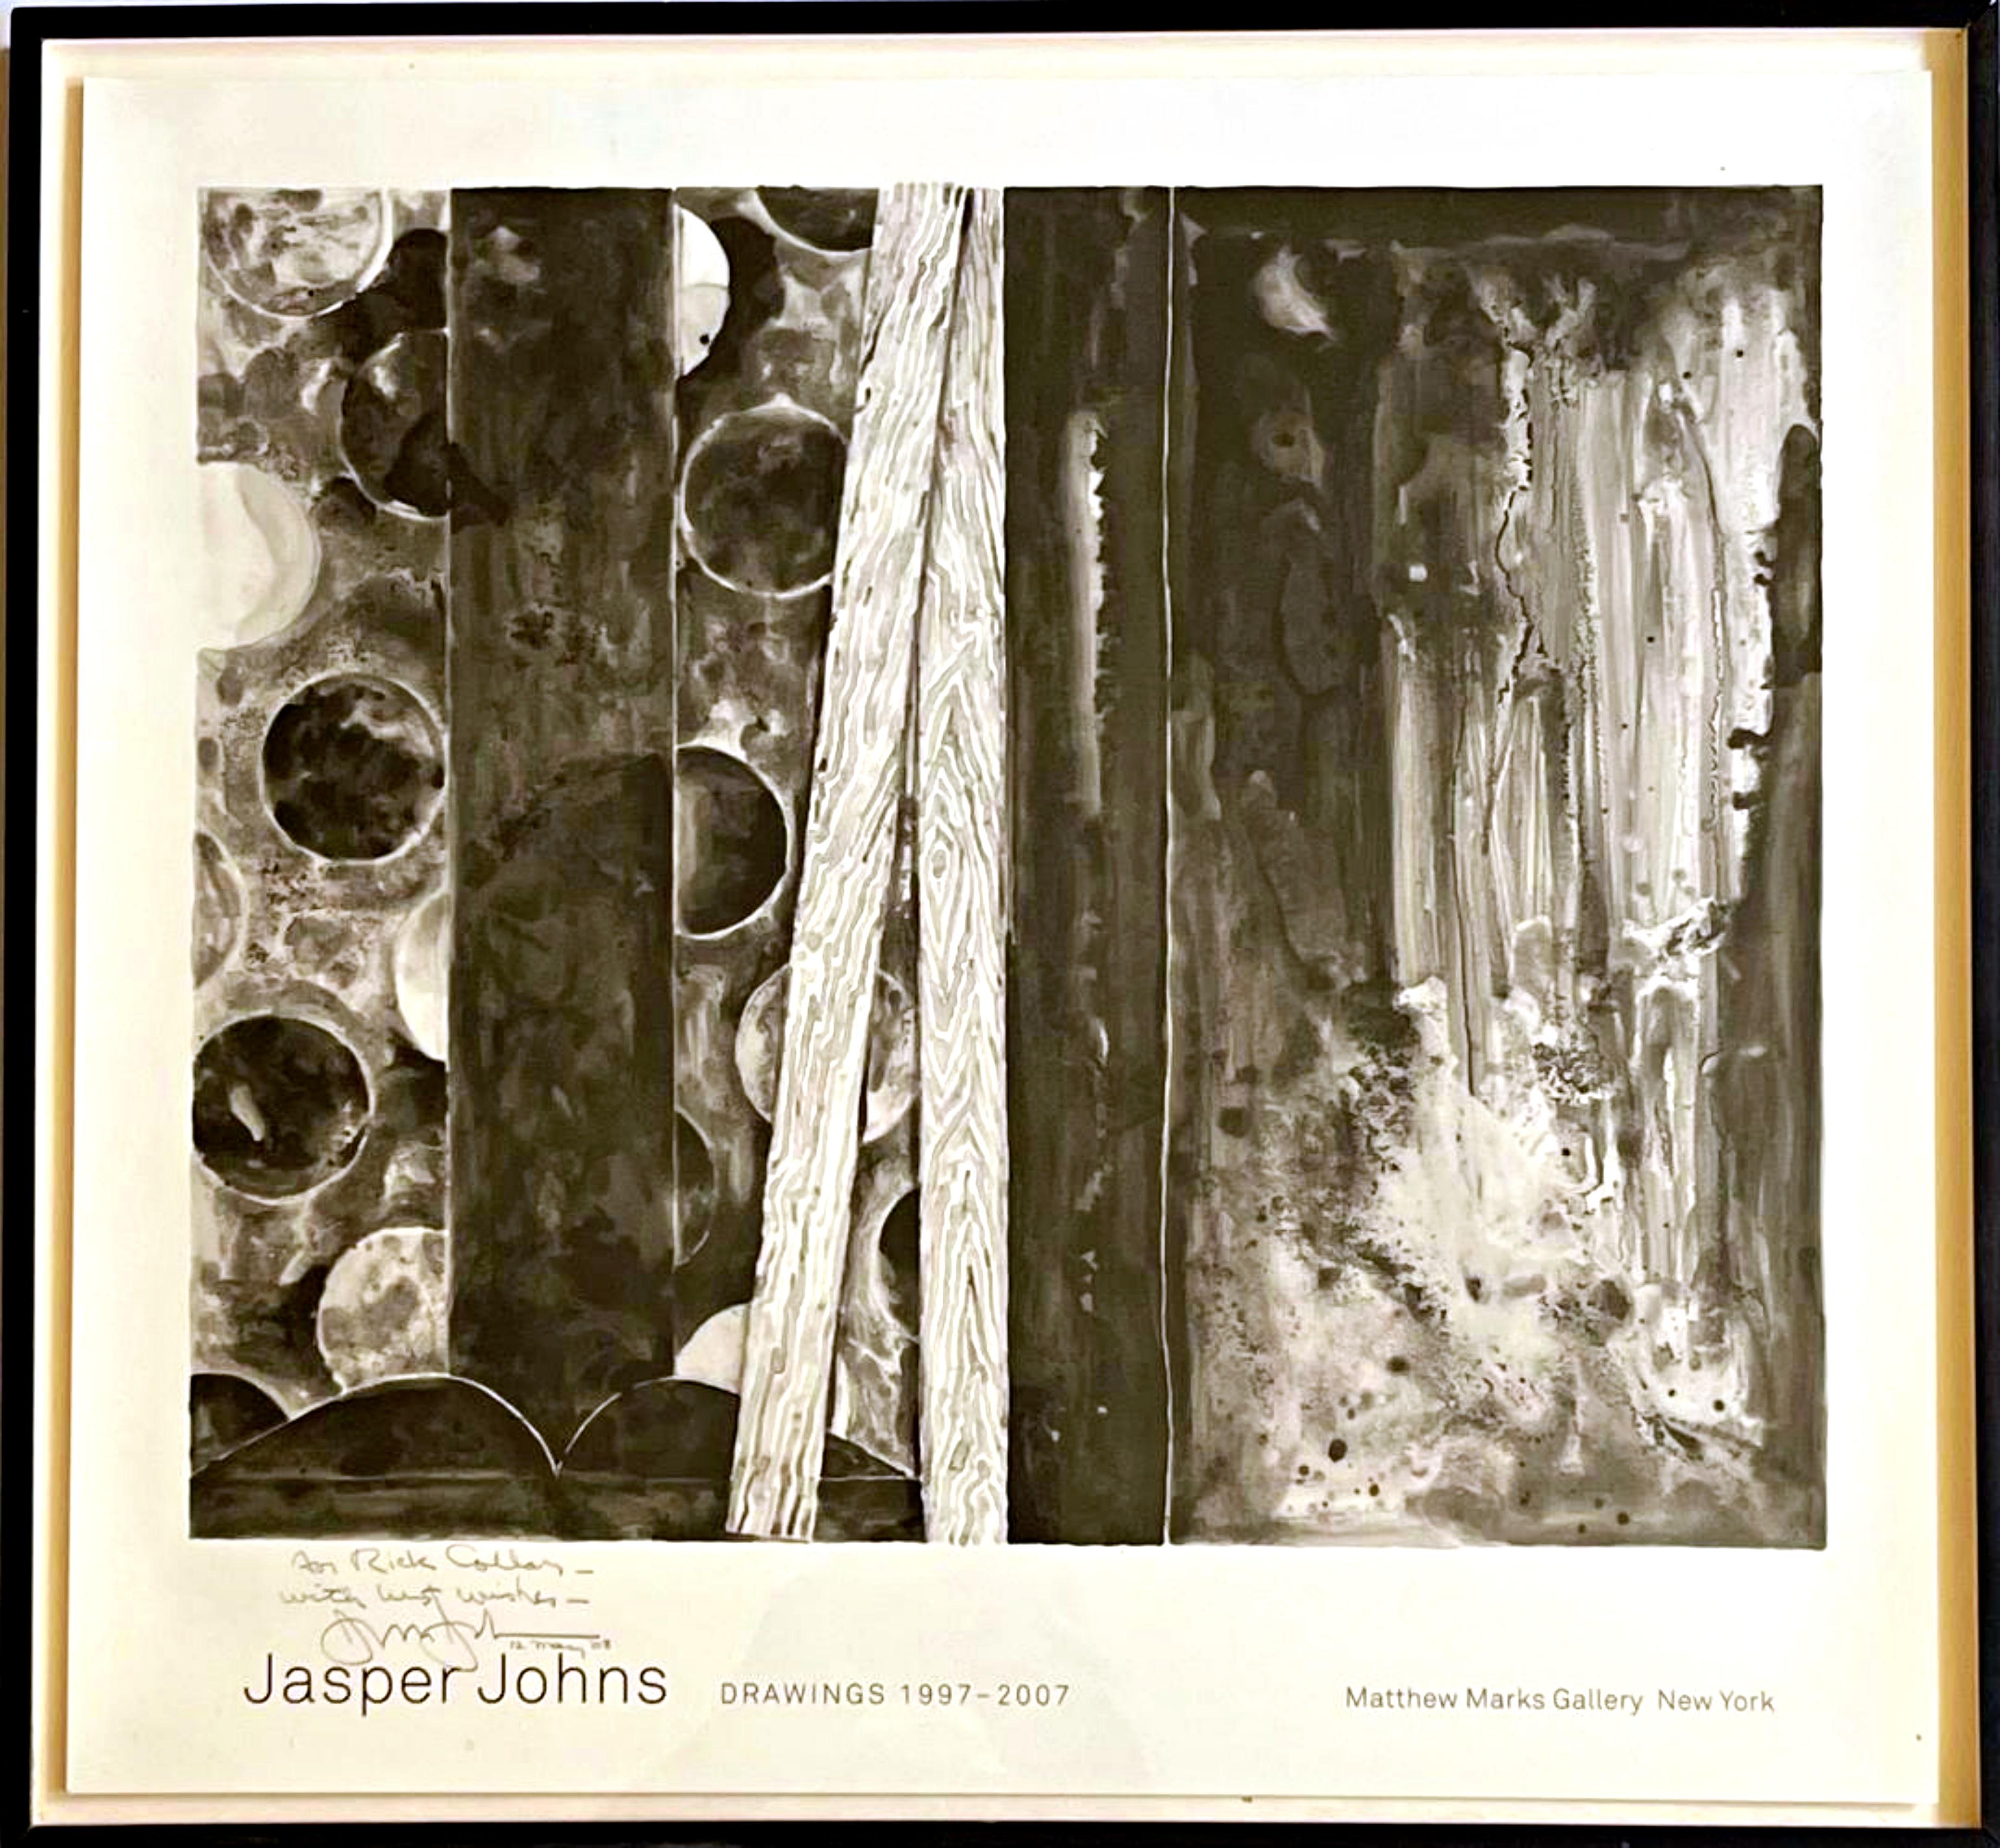 Jasper Johns Drawings 1997-2007, Matthew Marks Gallery (einmalig signiert, beschriftet und datiert), 2008
Offset-Lithographie
19 1/2 × 21 1/2 Zoll (Blatt(
Signiert, datiert 12. Mai '08 und mit Graphitstift bezeichnet "For Rick Collar With Best